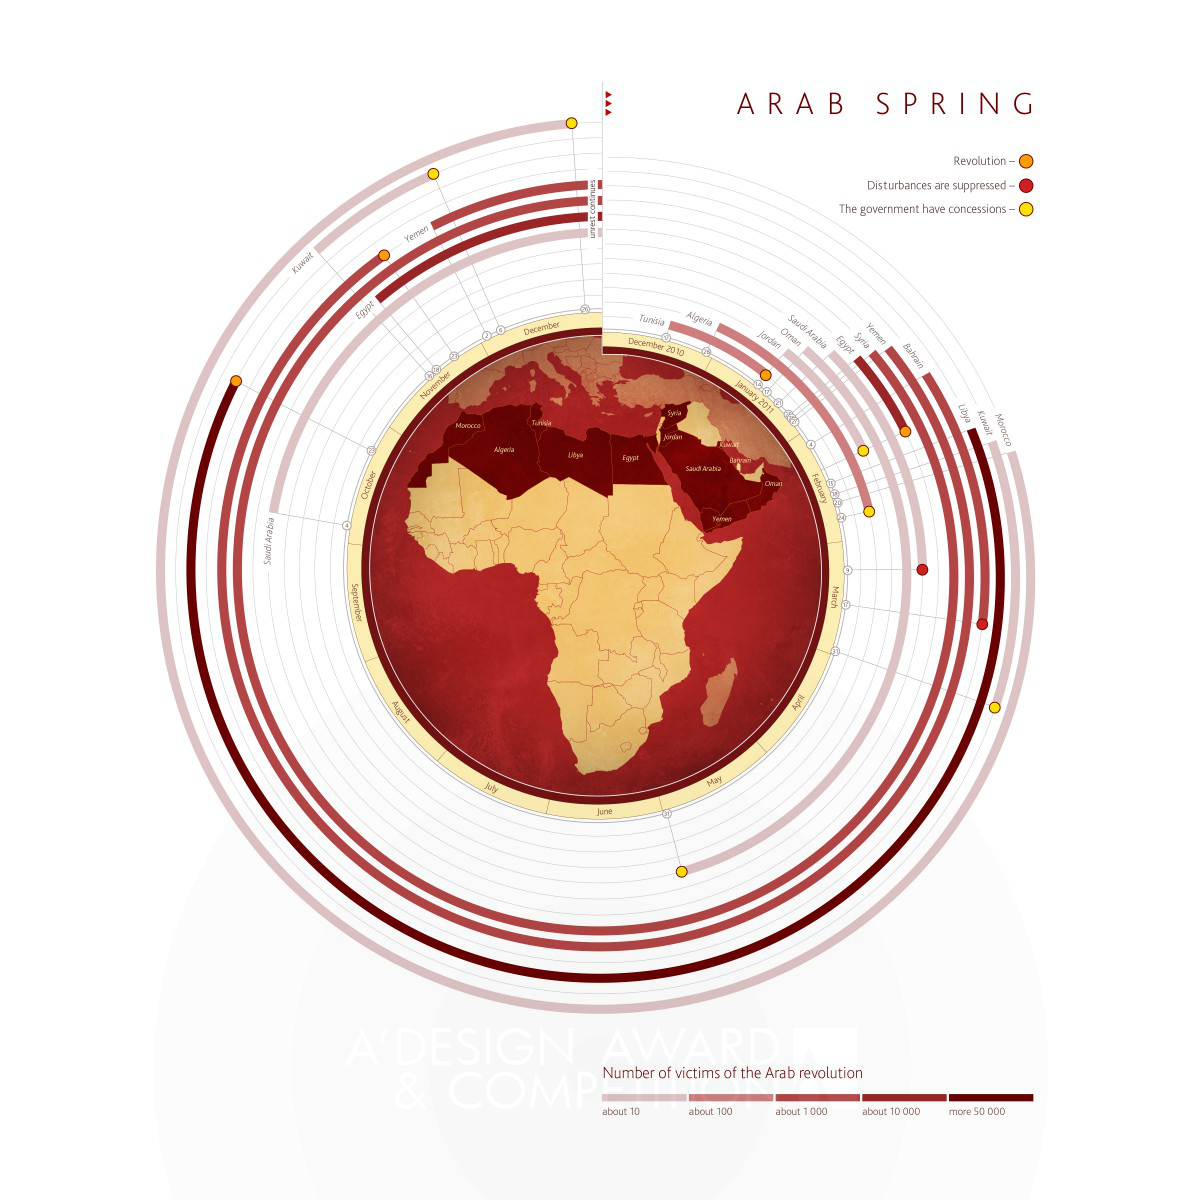 Arab spring Data visualization by Kirill Khachaturov